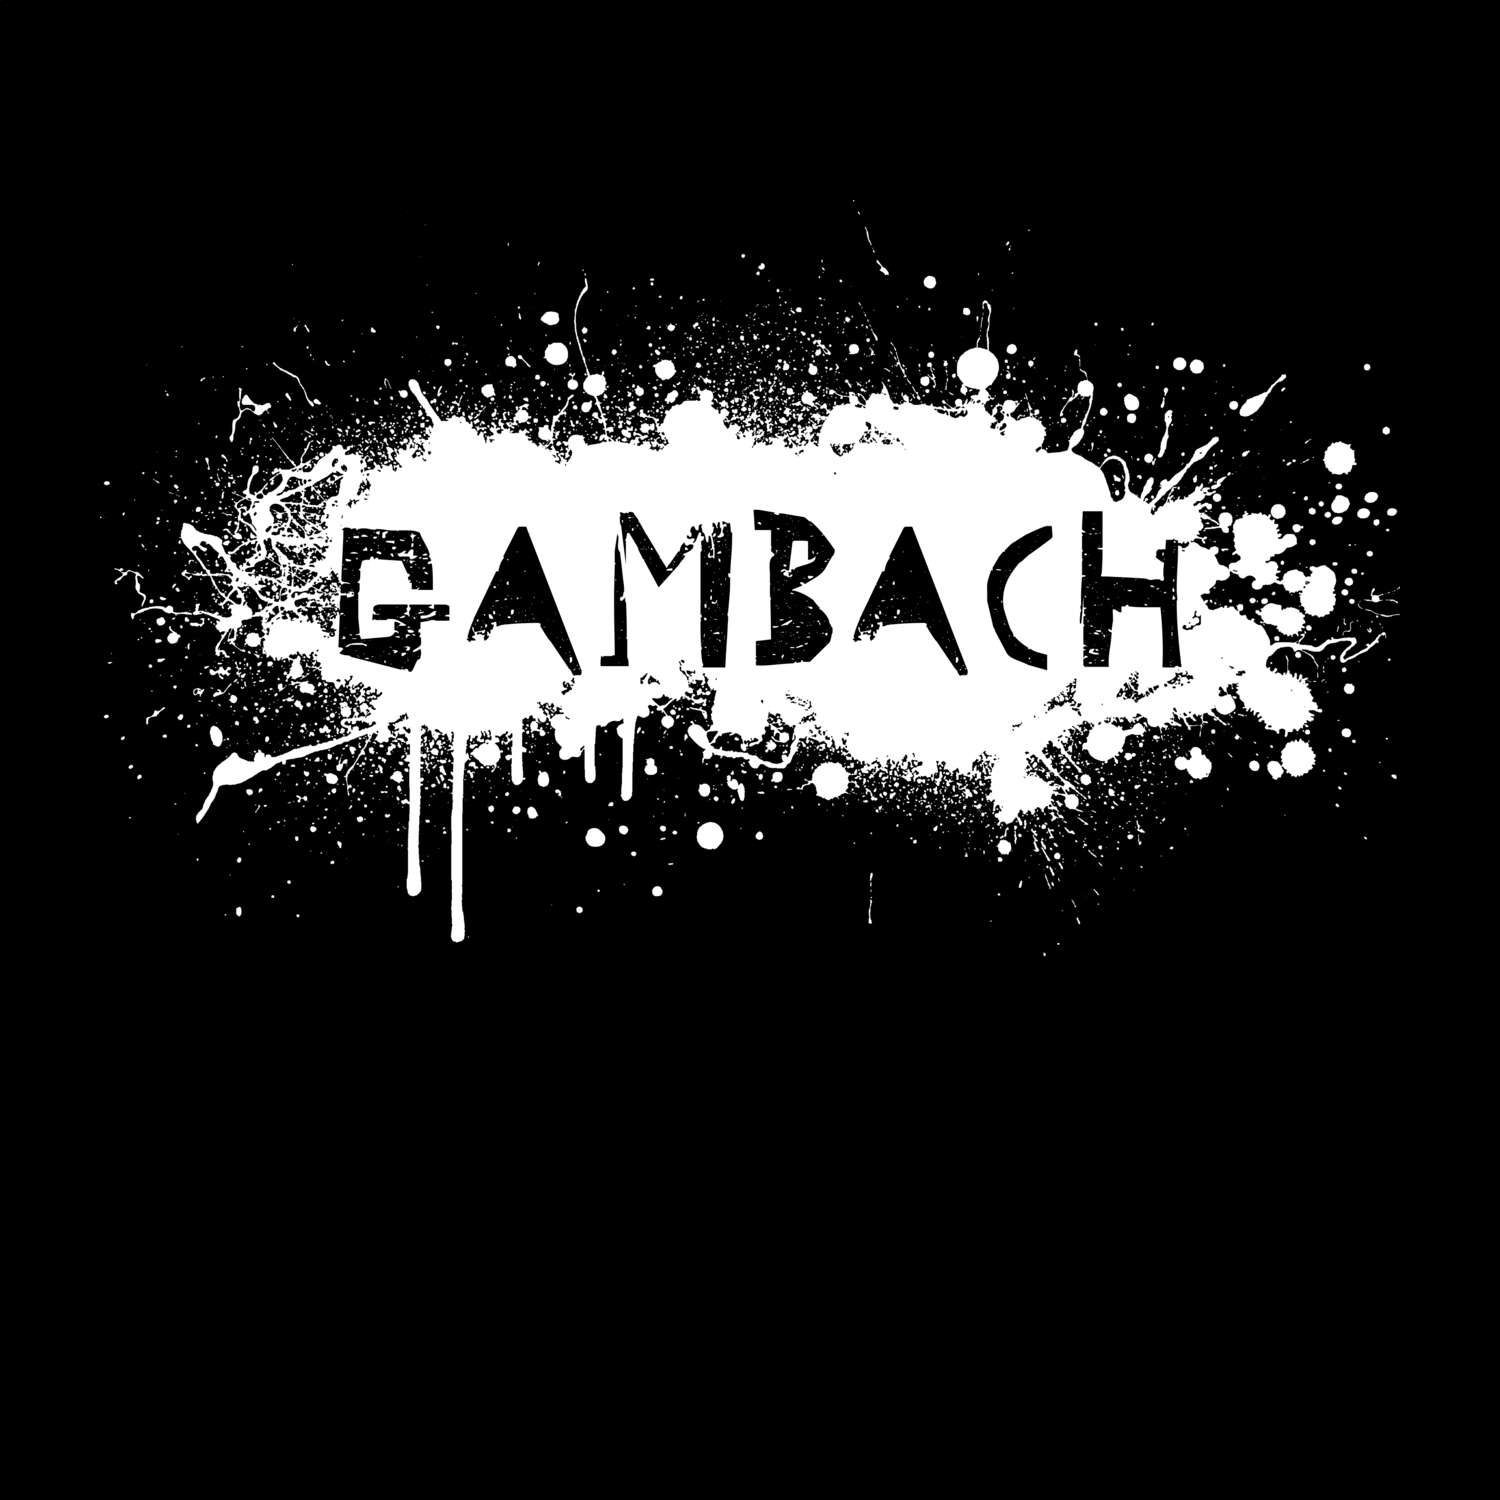 Gambach T-Shirt »Paint Splash Punk«